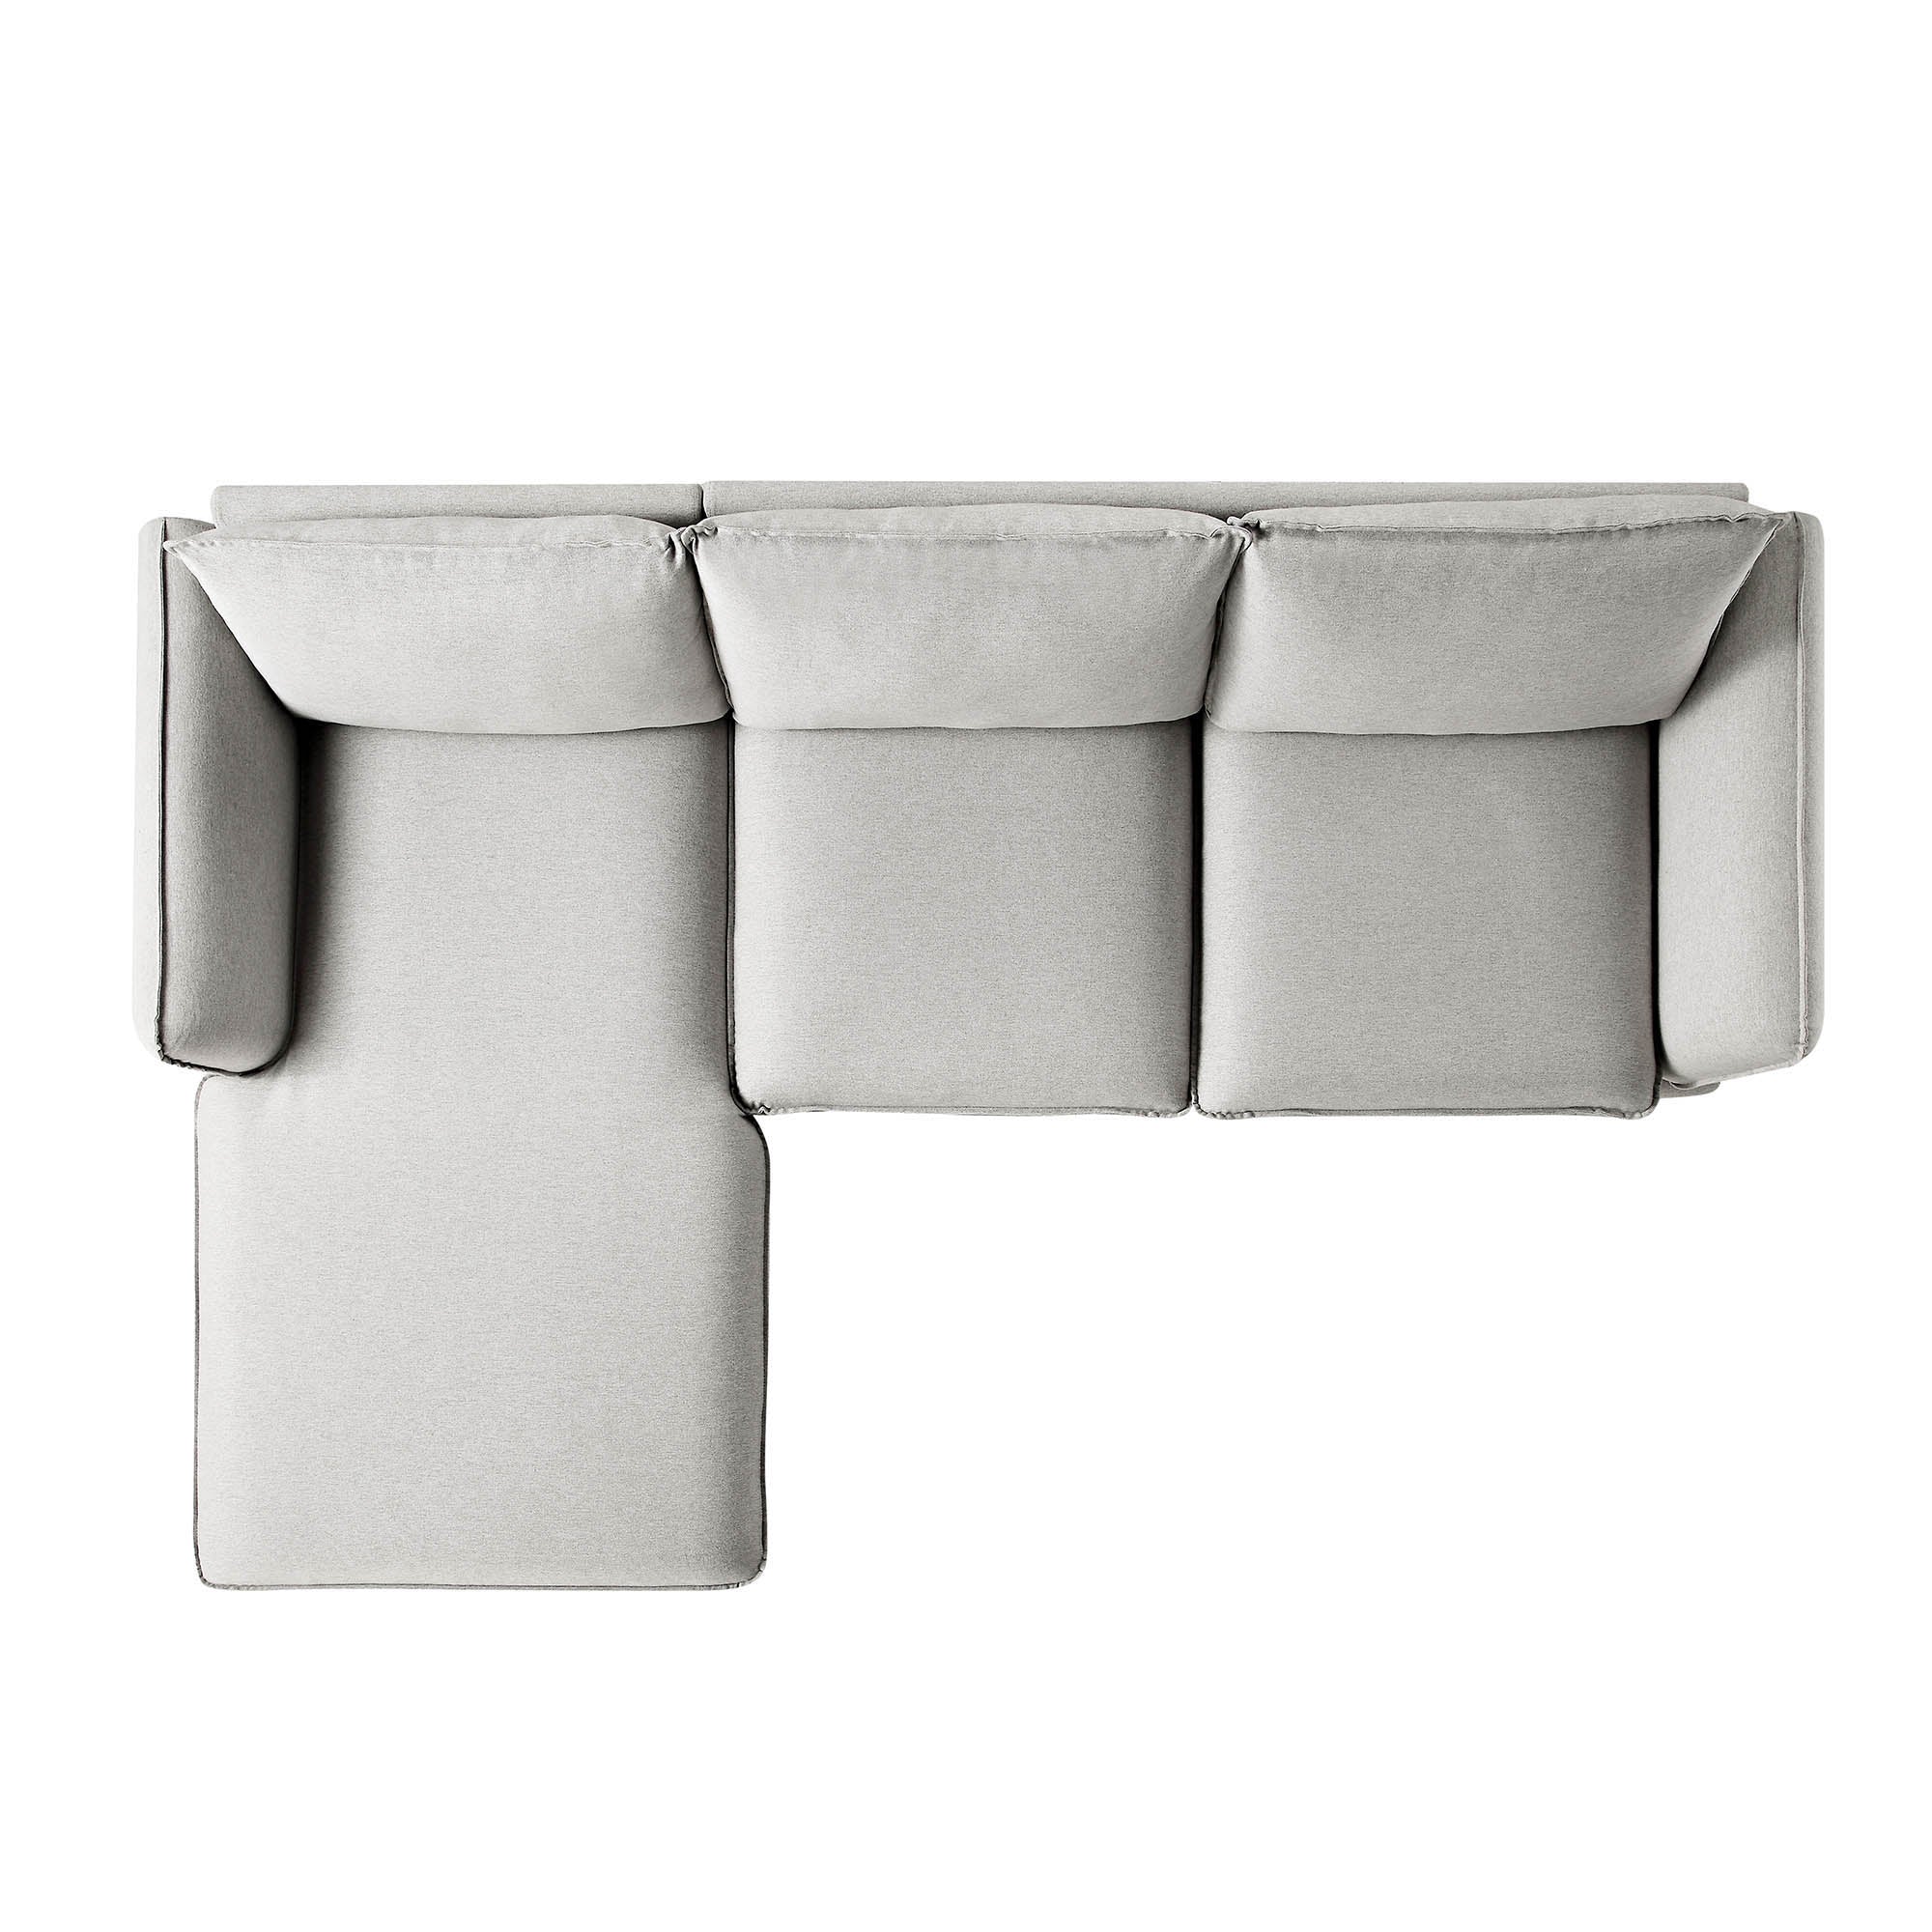 Obriel Grey Marl Fabric Sofa, Grande Chaise Sofa Left Hand